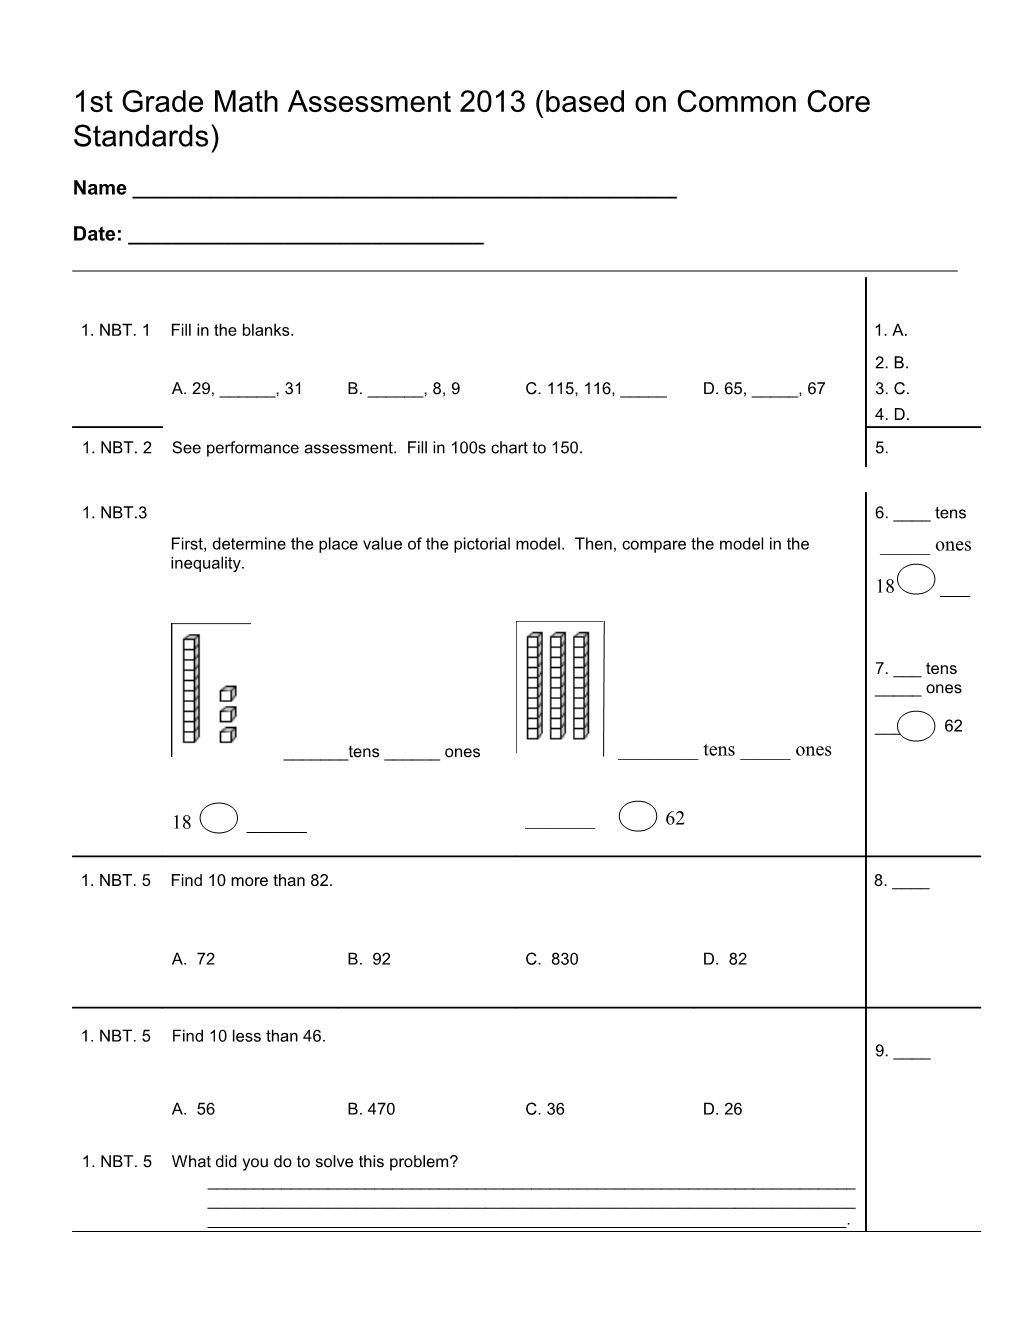 1St Grade Math Assessment 2013 (Based on Common Core Standards)